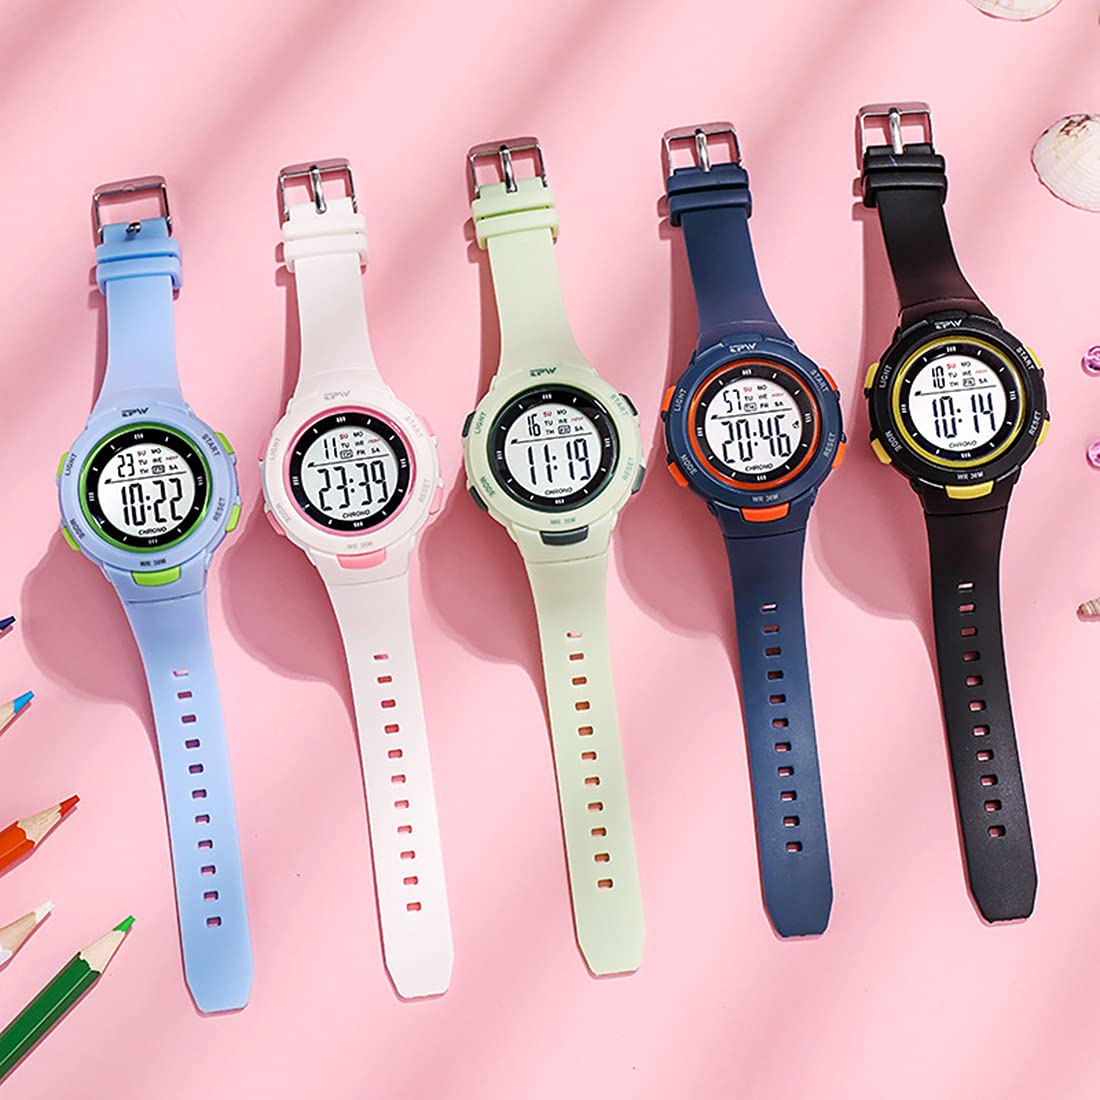 BESTKANG Women's Outdoor Sport Watches Easy to Read LED Alarm Chronograph Multifunction Waterproof Digital Watch